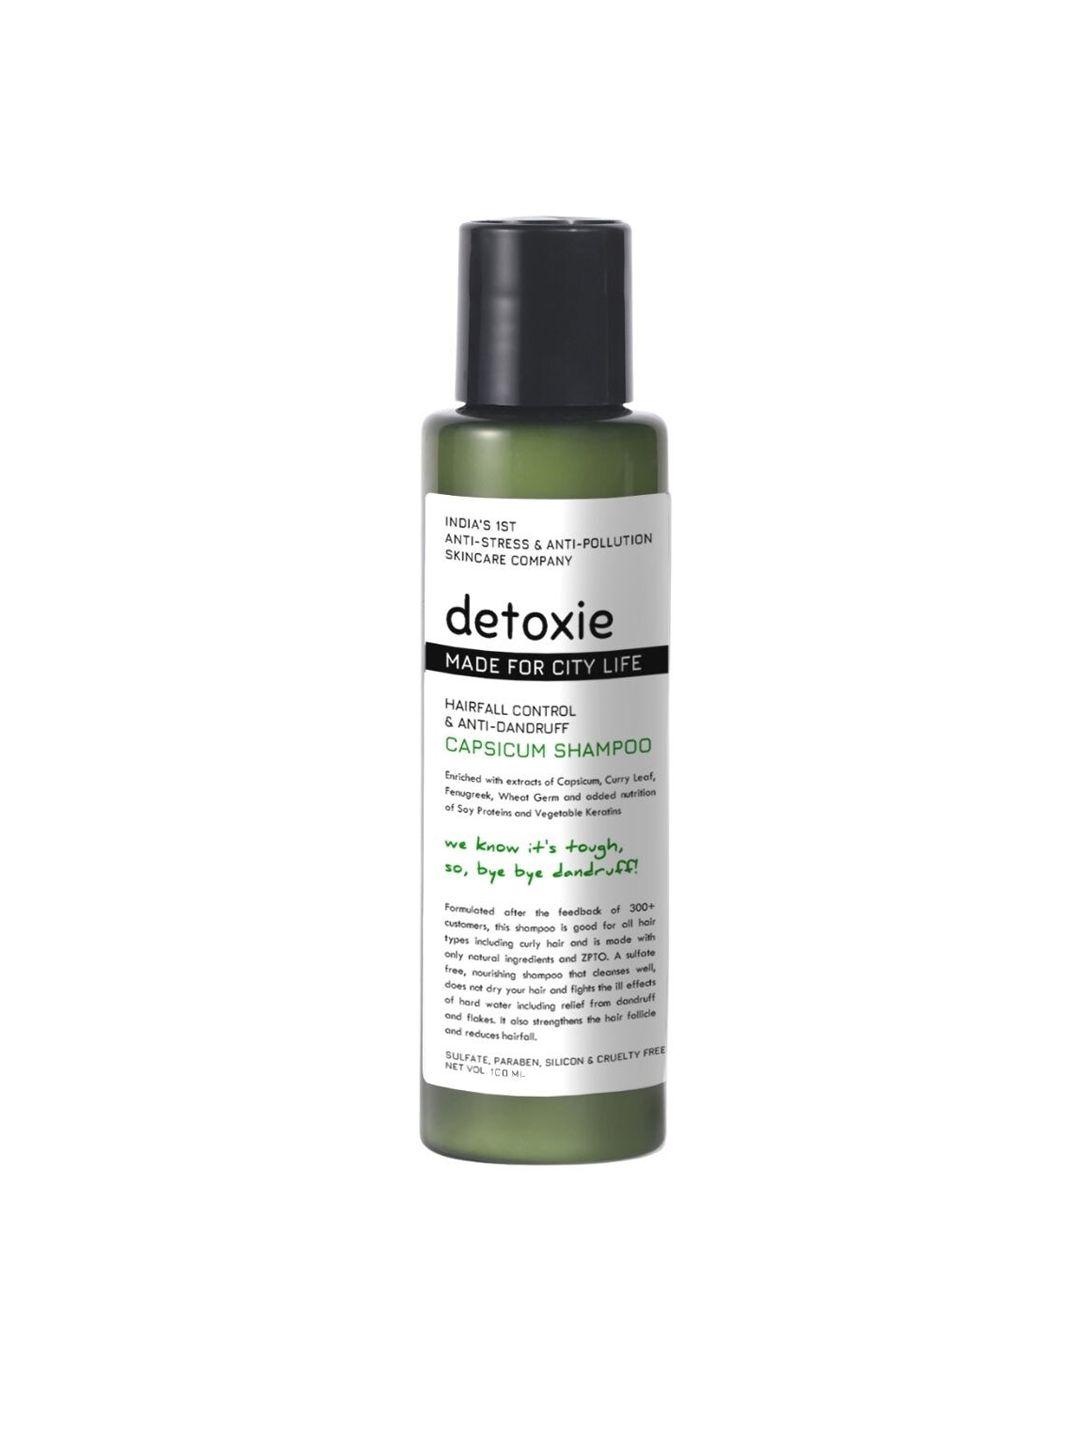 detoxie anti-dandruff & flake relief capsicum shampoo  100 ml